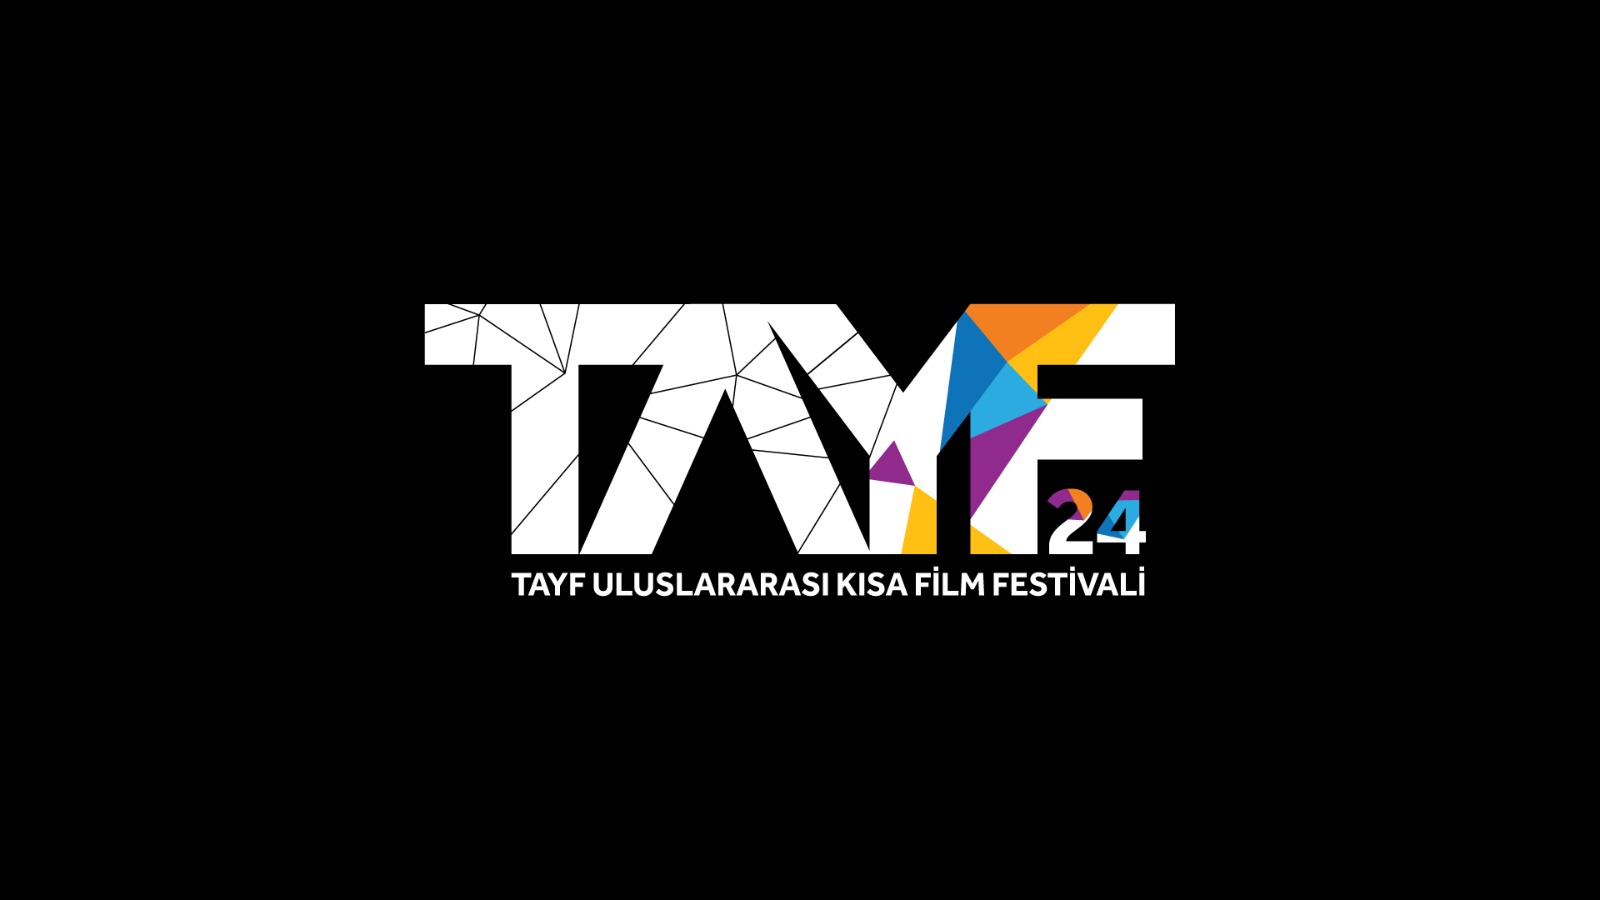 Tayf Film Fest-1